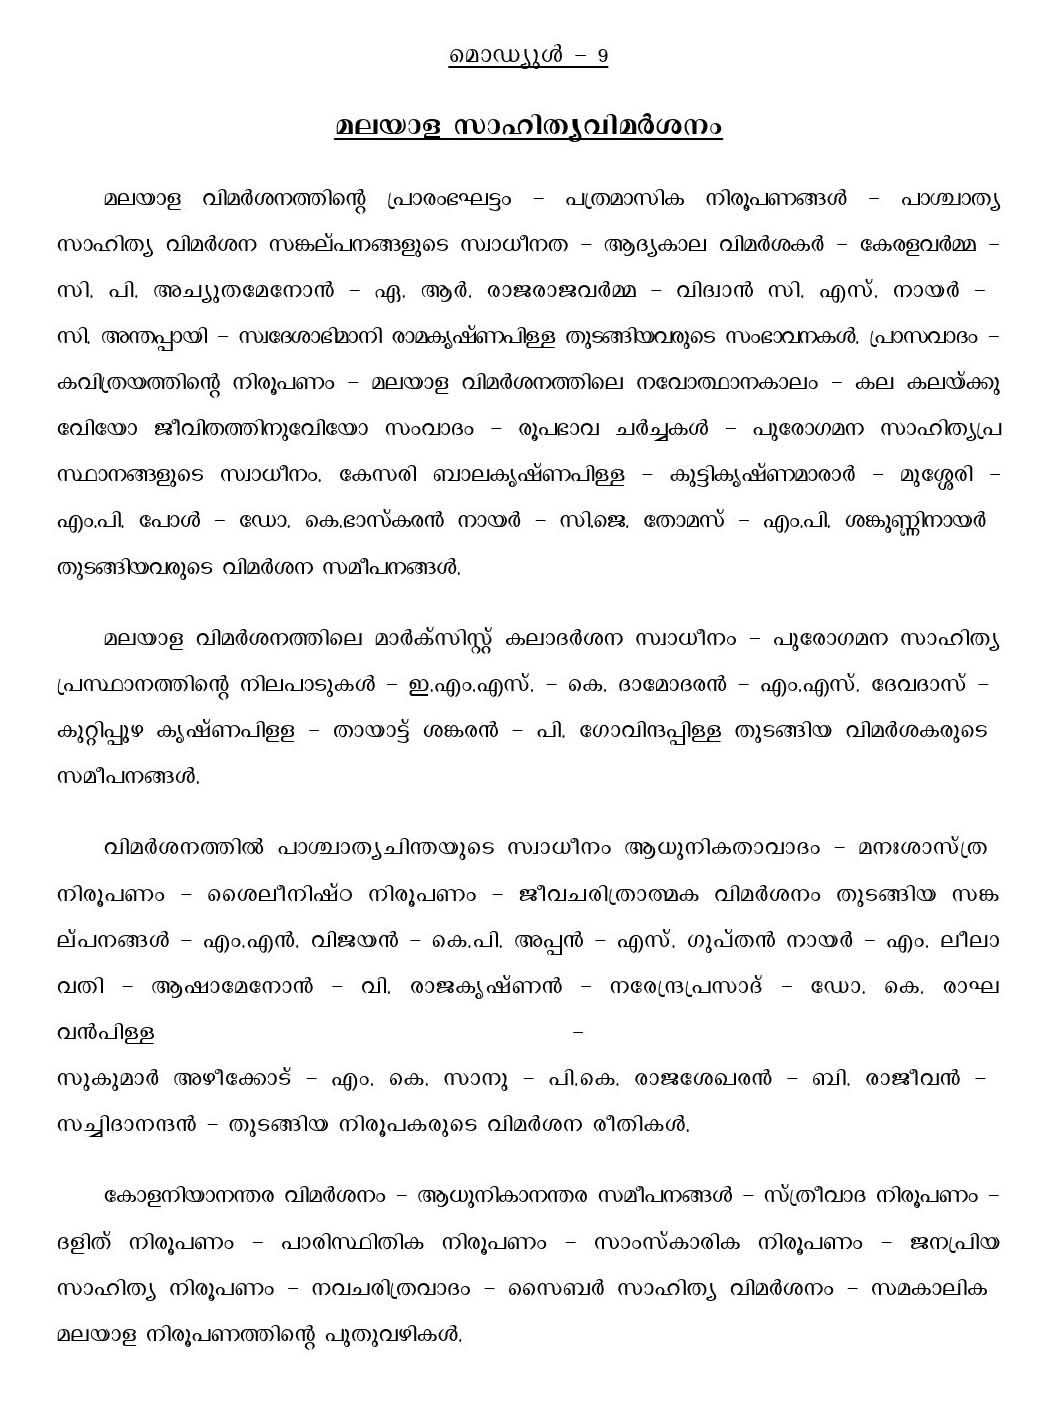 Kerala PSC Assistant Professor Malayalam Exam Syllabus - Notification Image 12